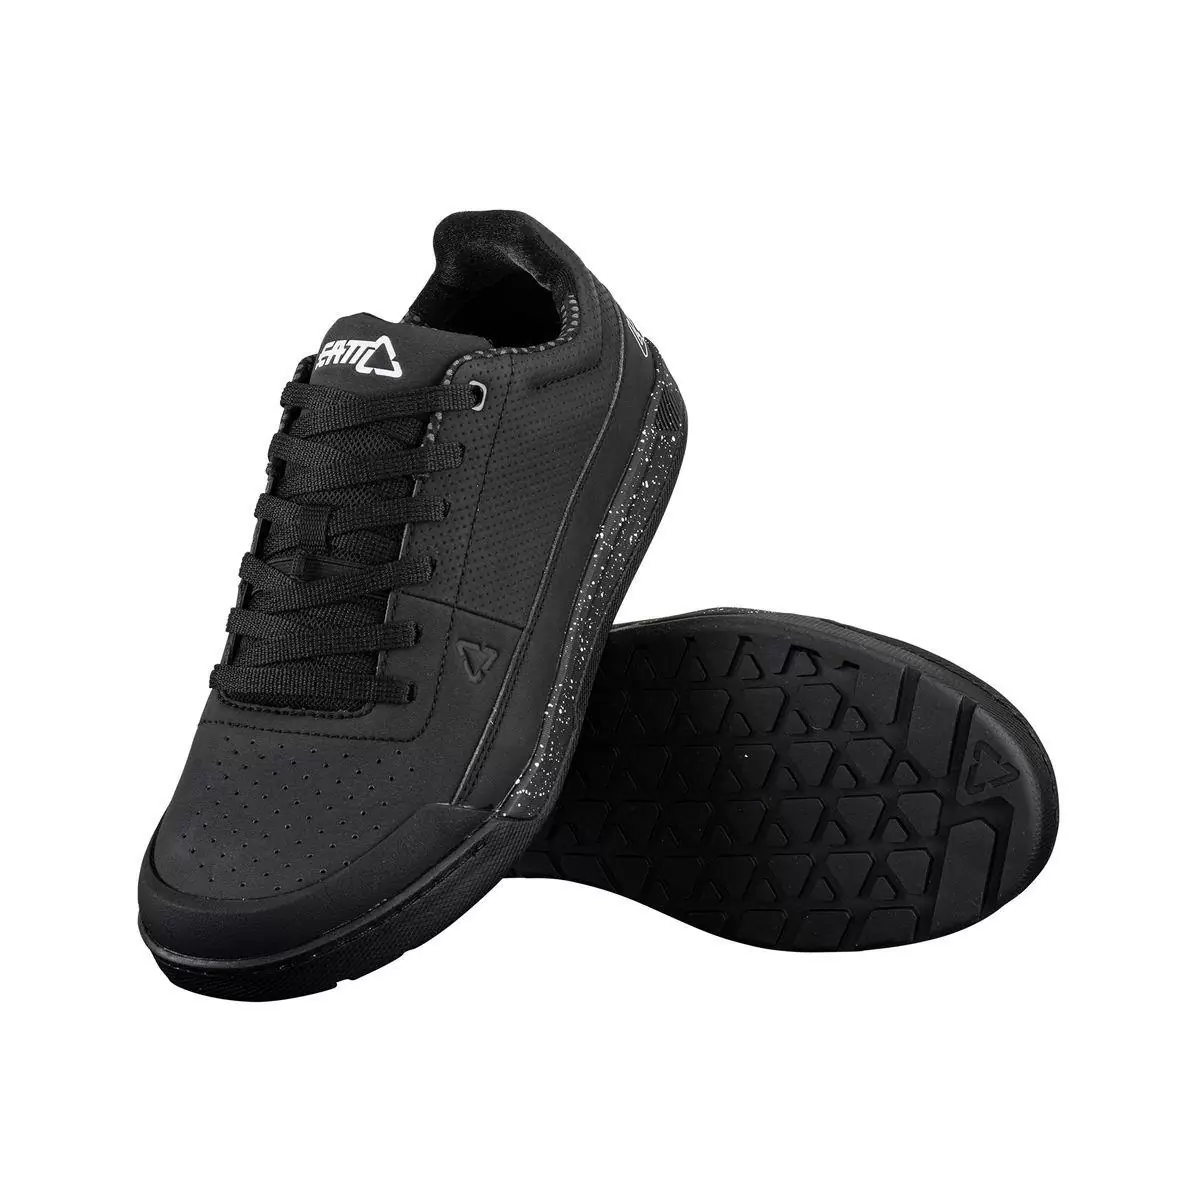 Mtb Shoes 2.0 Flat Black Size 40 #5